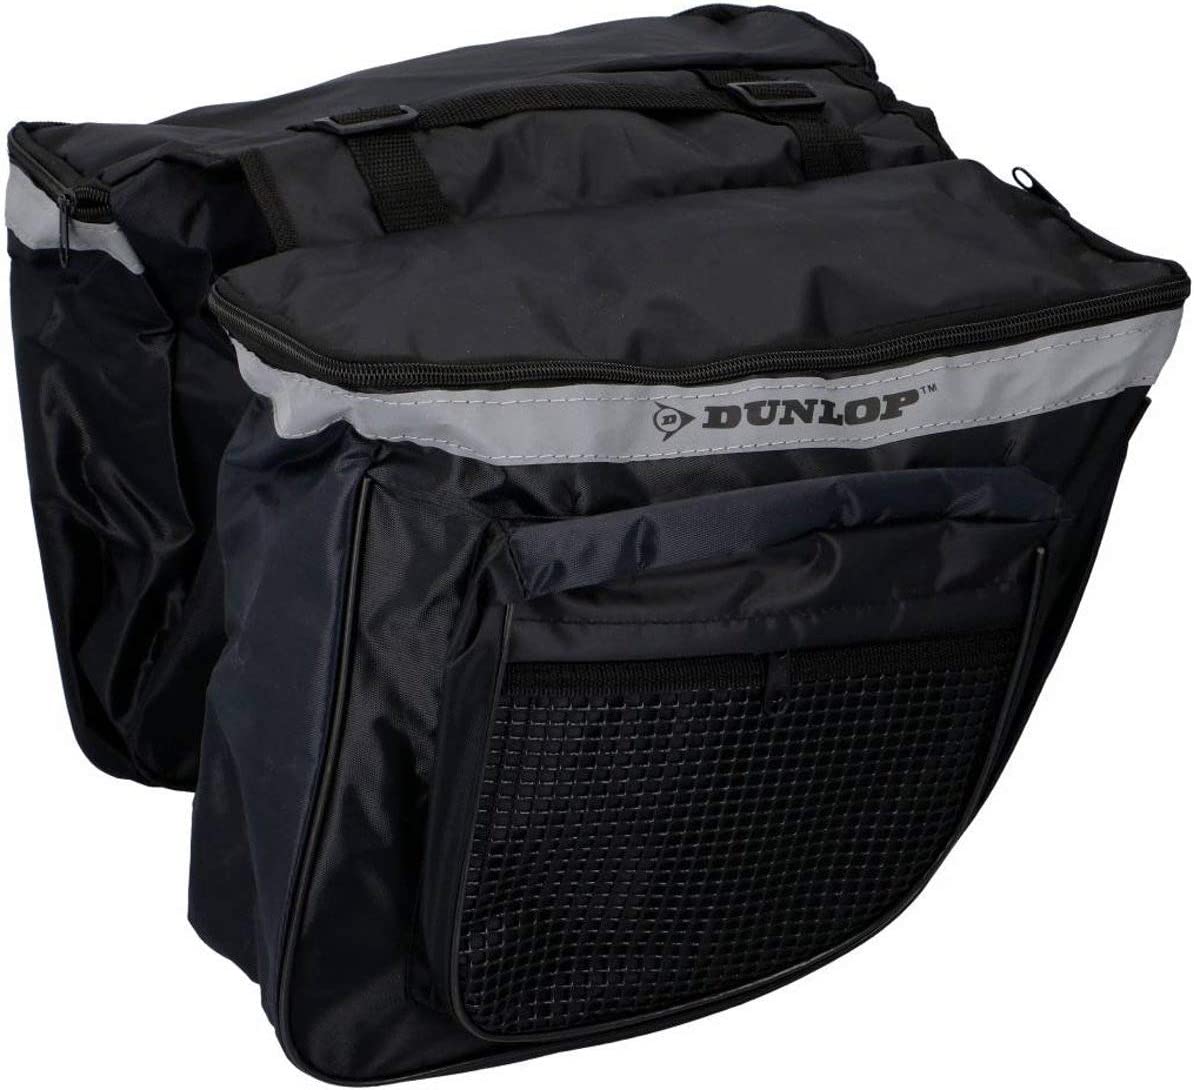 Dunlop double bike bag, black